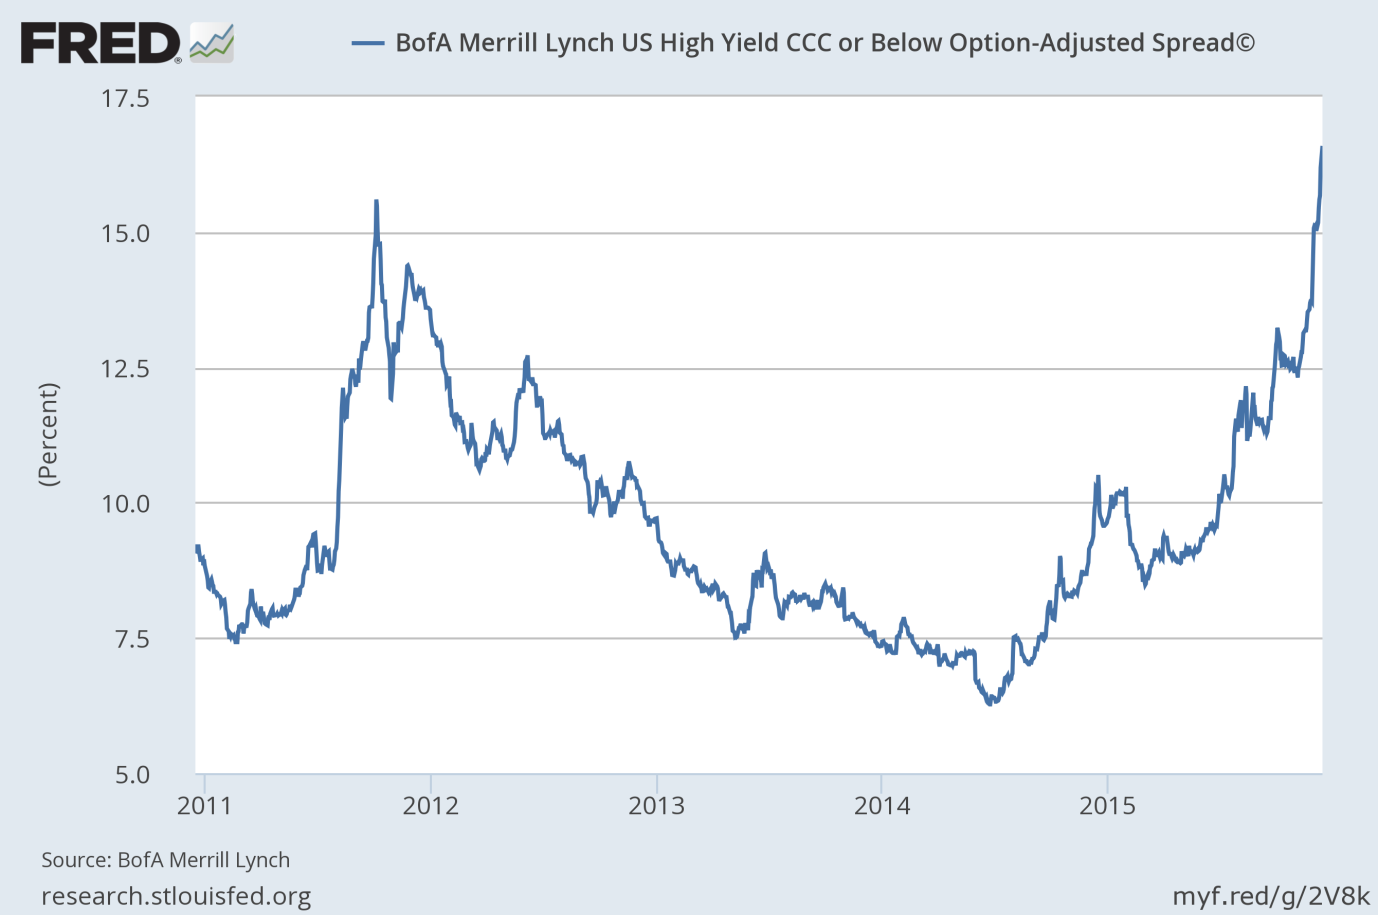 US High Yield CCC